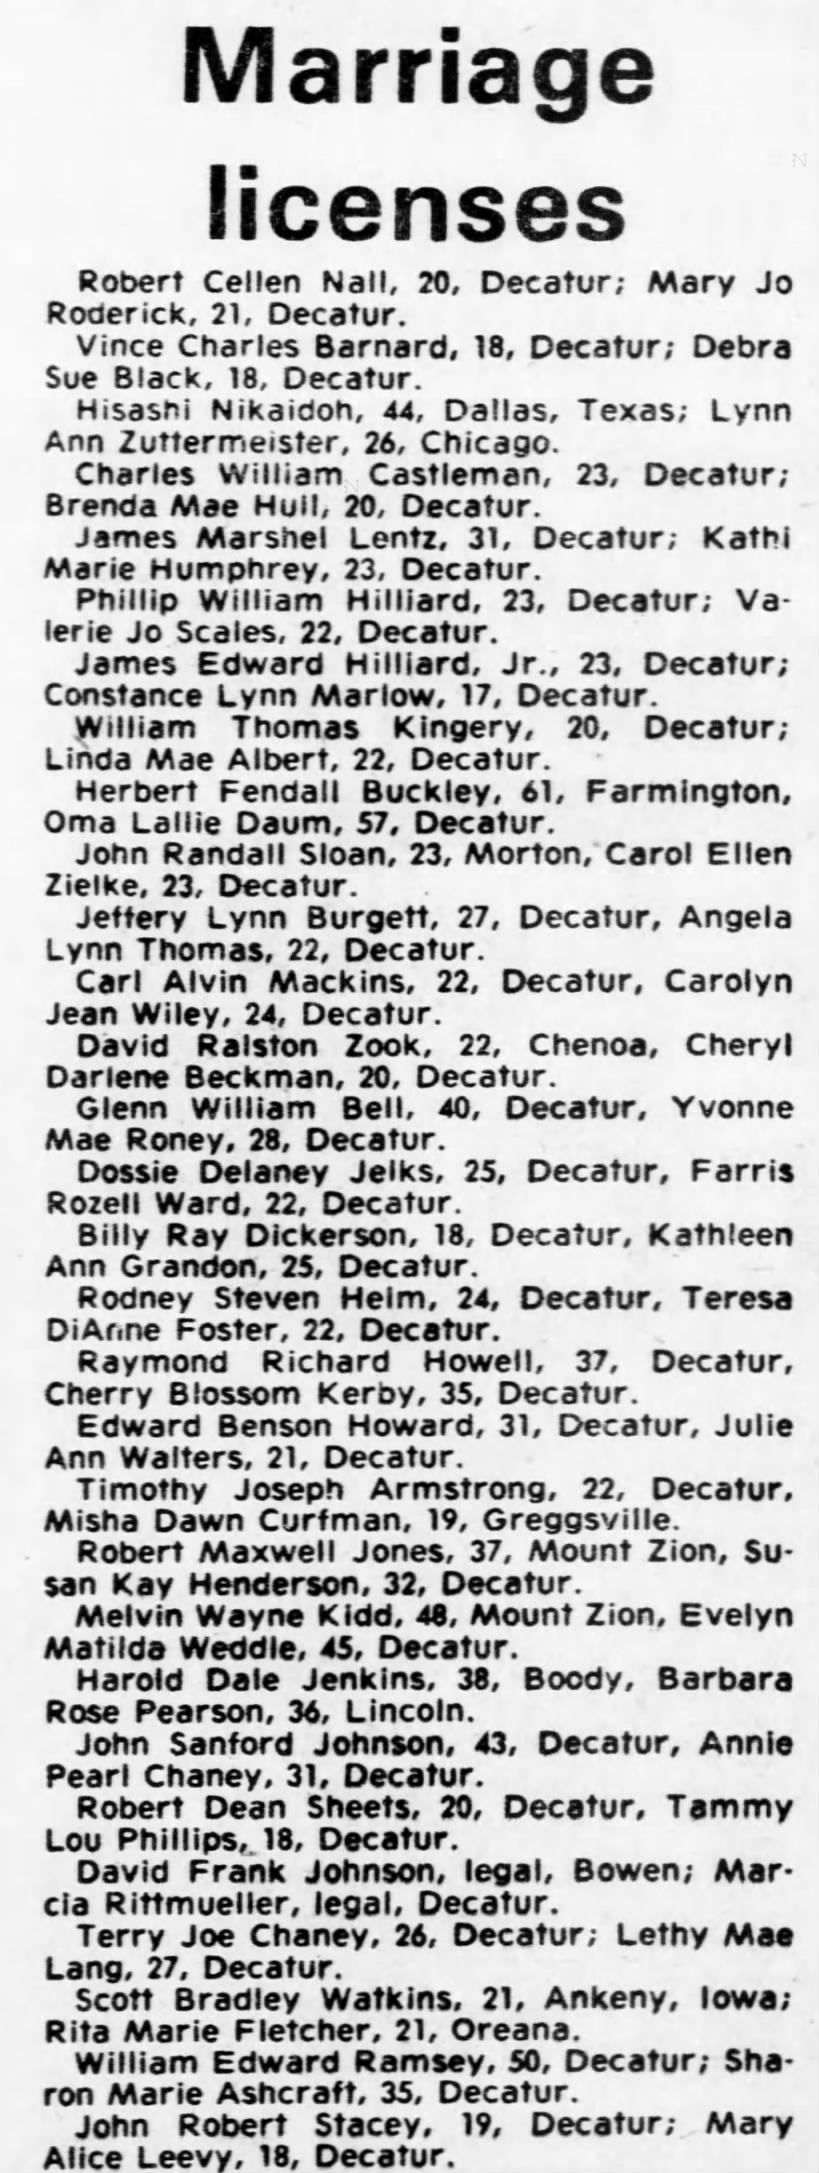 William Edward Ramsey Jr. 
Marriage License;
The Decatur Herald (Decatur IL)
17 Dec 1978, Sunday